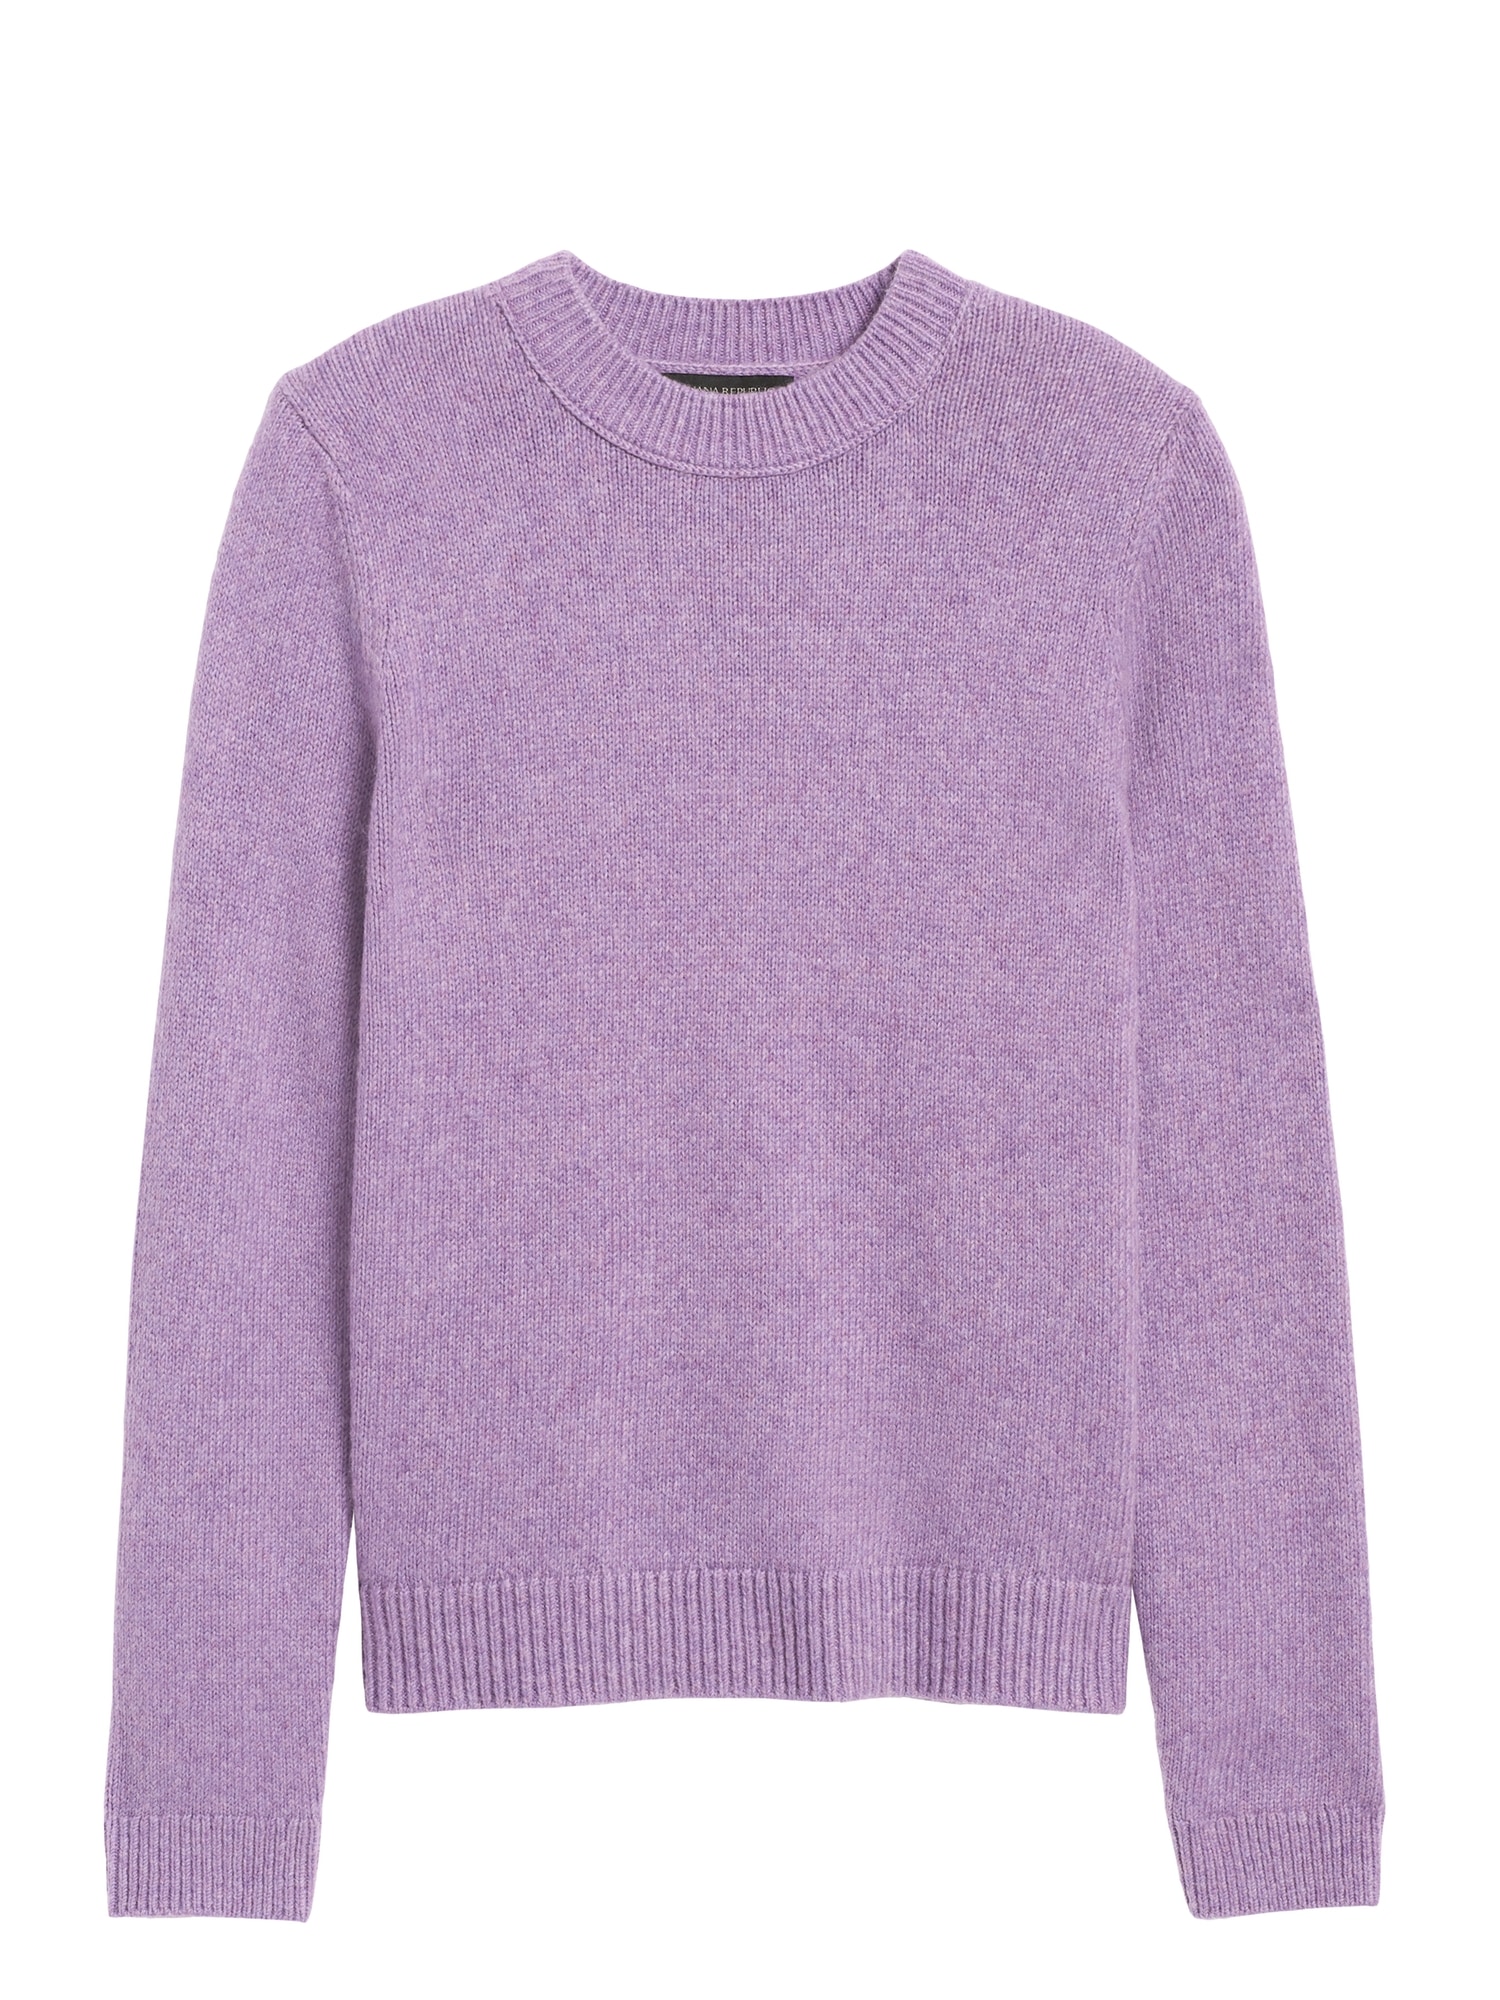 Petite Cotton-Blend Crew-Neck Sweater